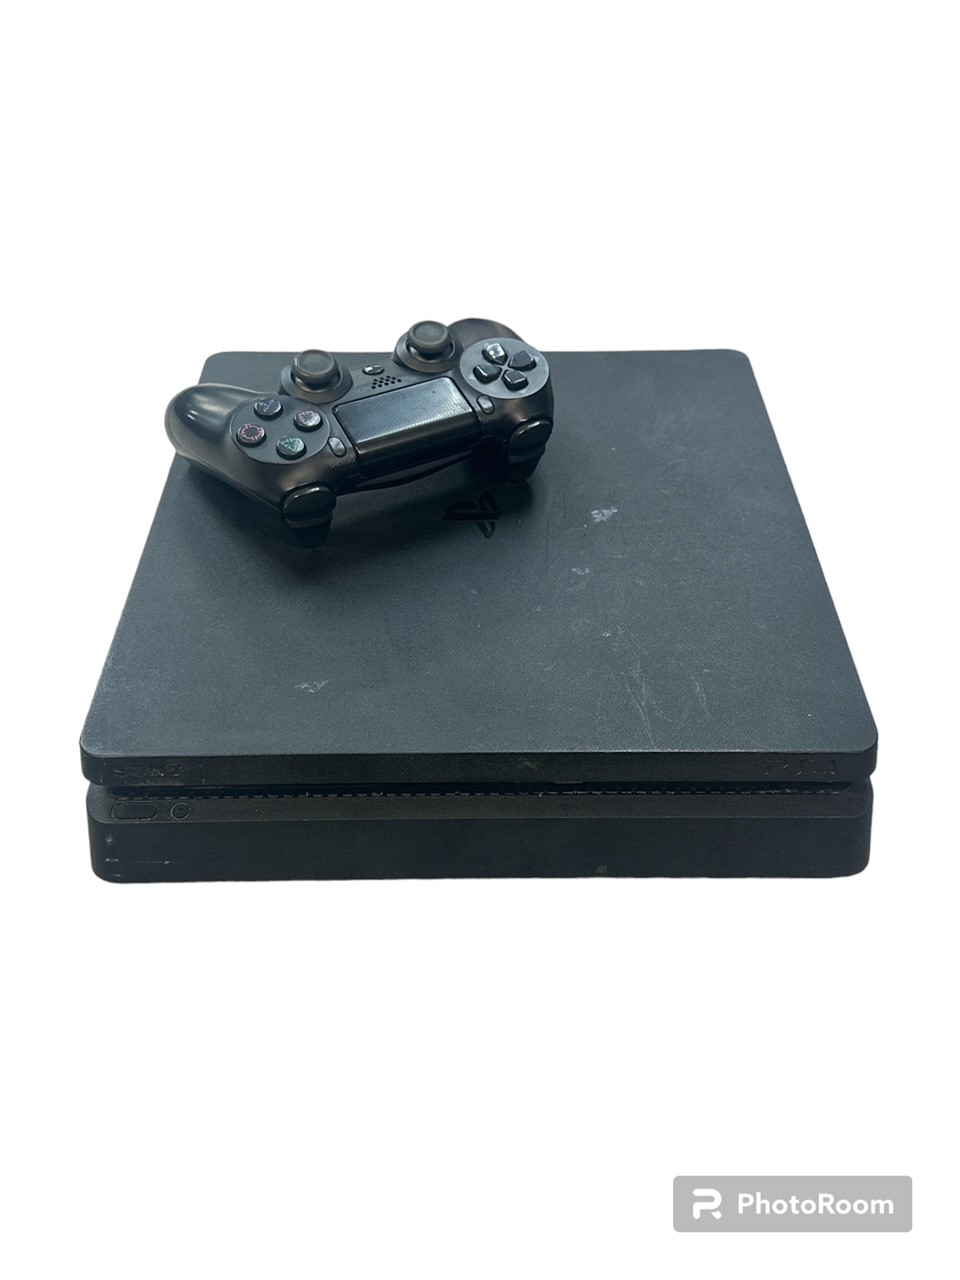 PlayStation 4 Slim 500GB W/ Third Party Controller - Sony